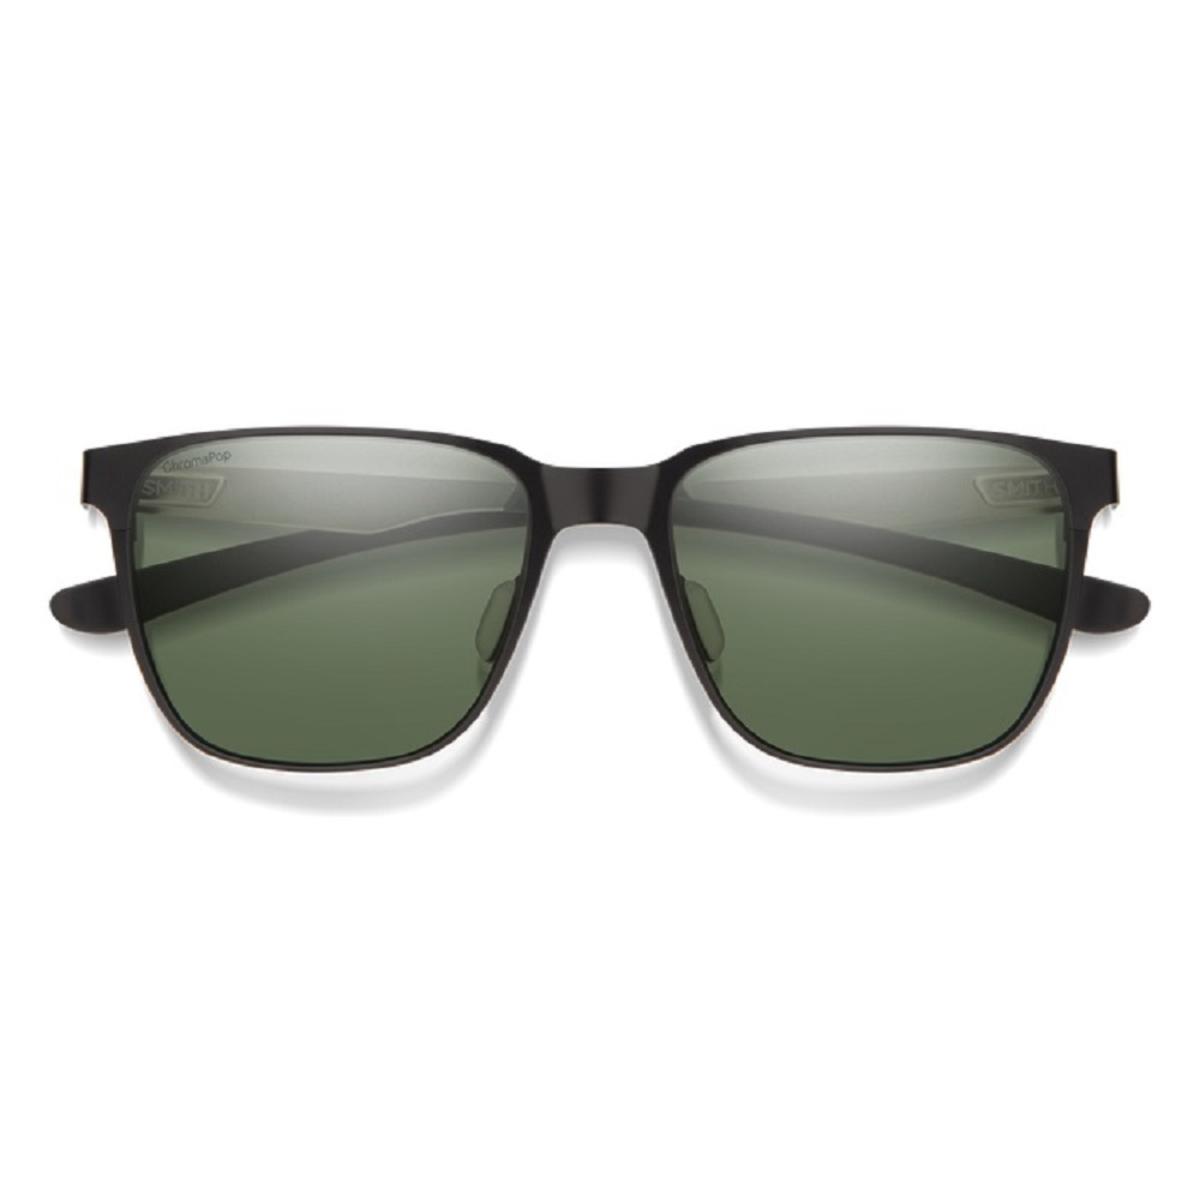 Smith Optics Lowdown Metal Sunglasses ChromaPop Polarized Gray Green - Matte Black/Silver Frame